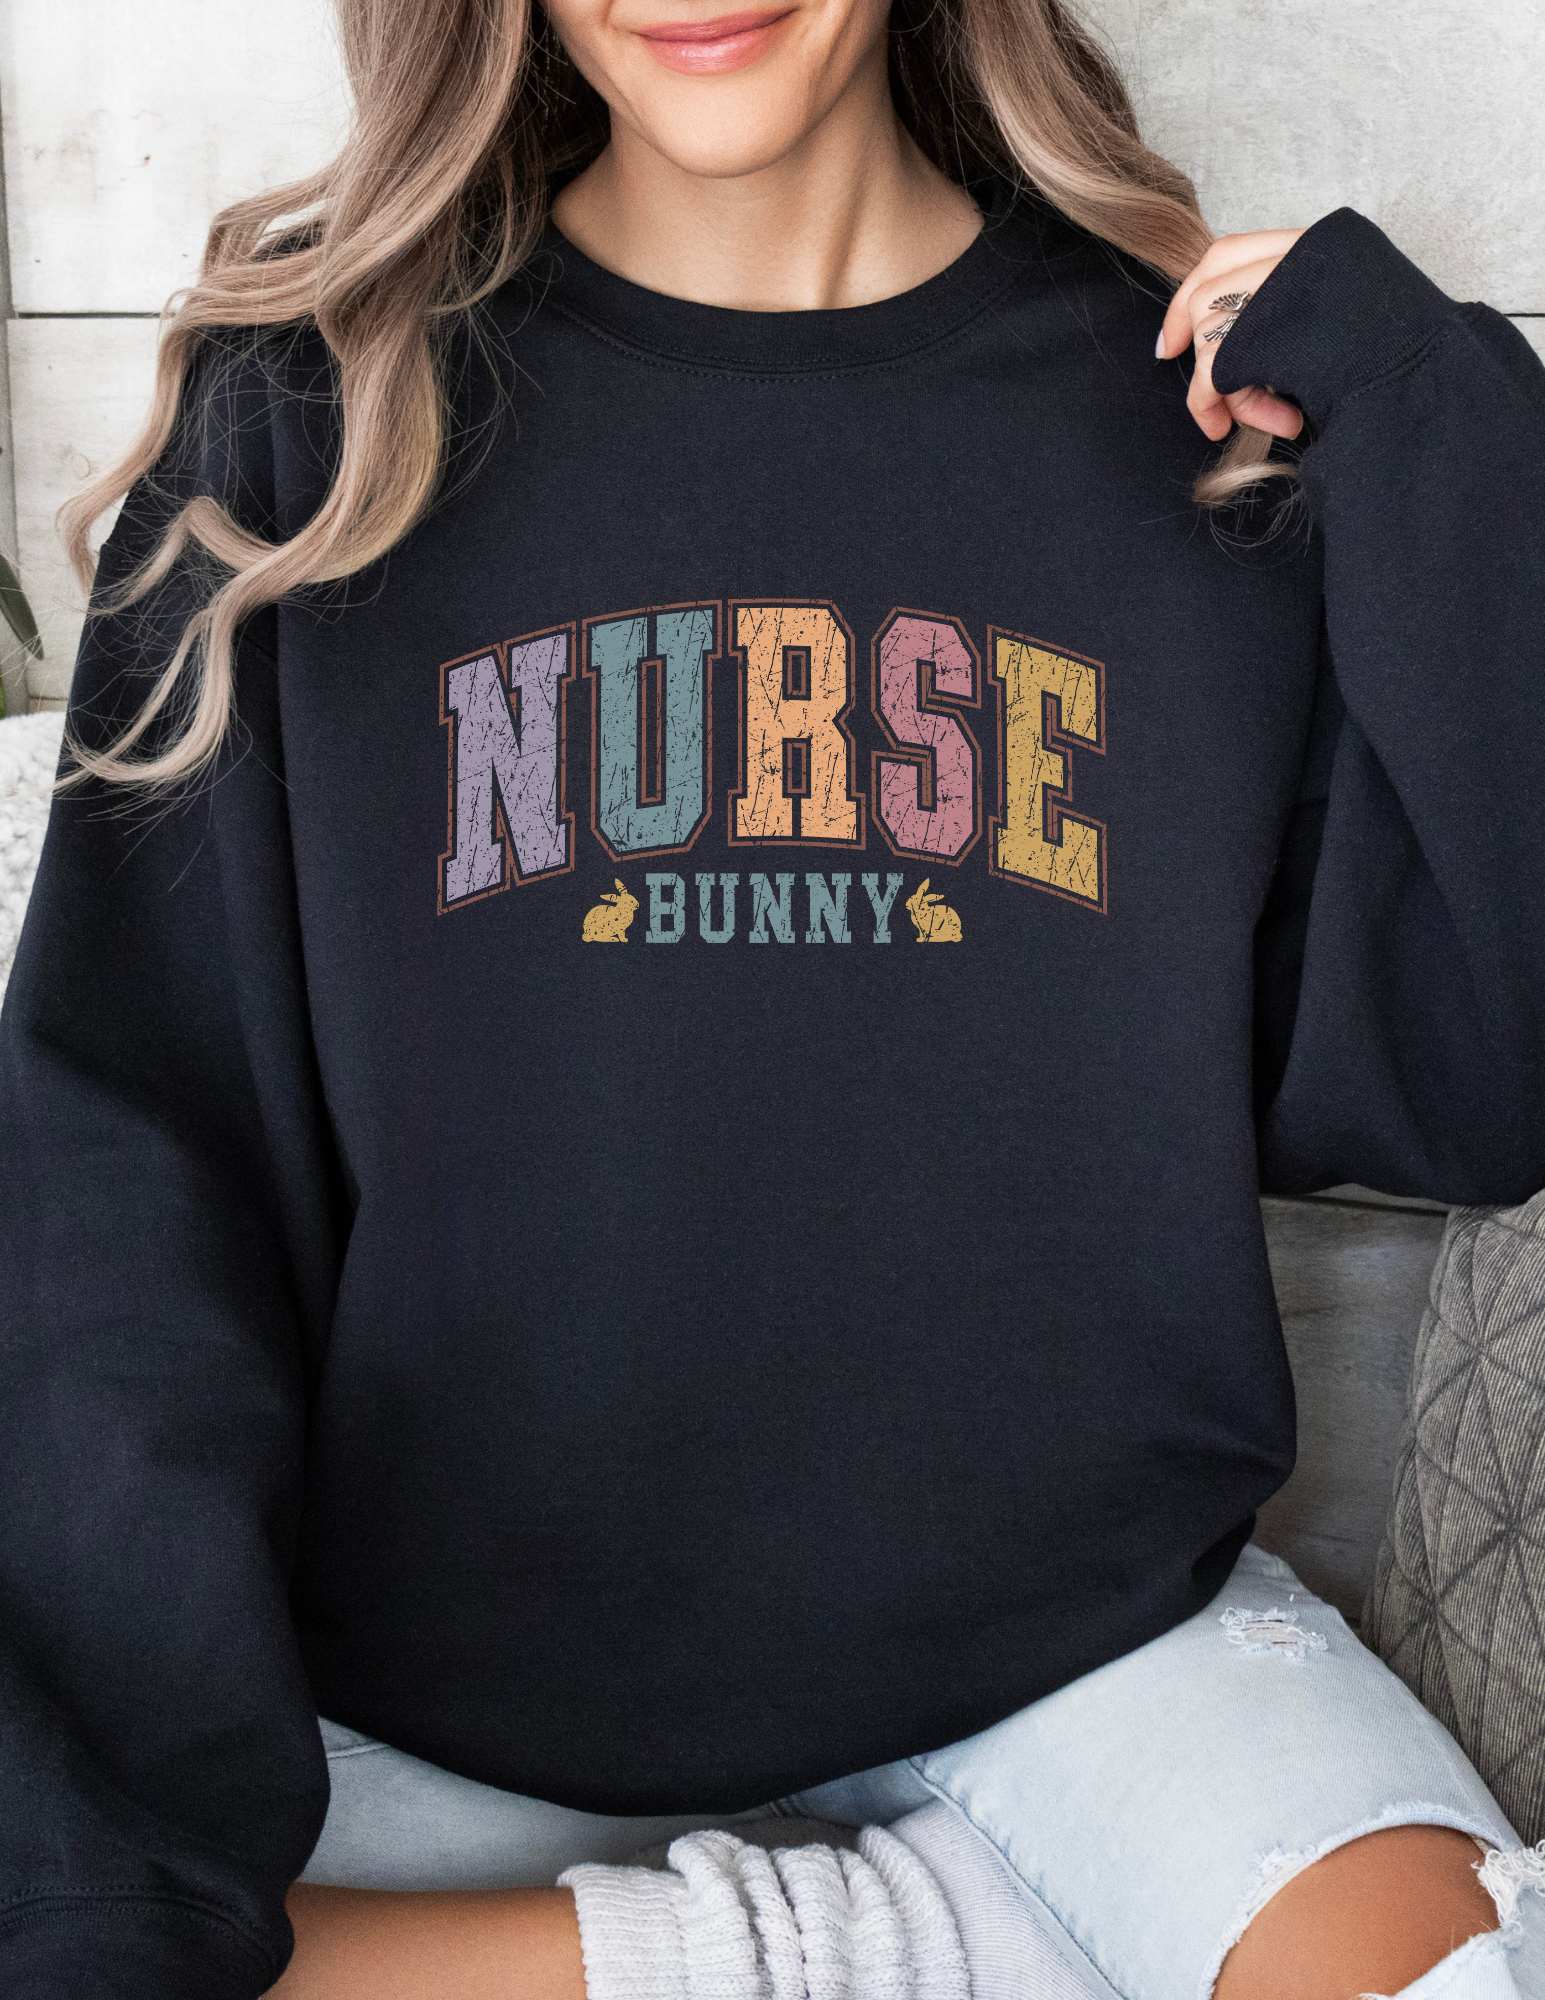 Nurse Easter Bunny Sweatshirt